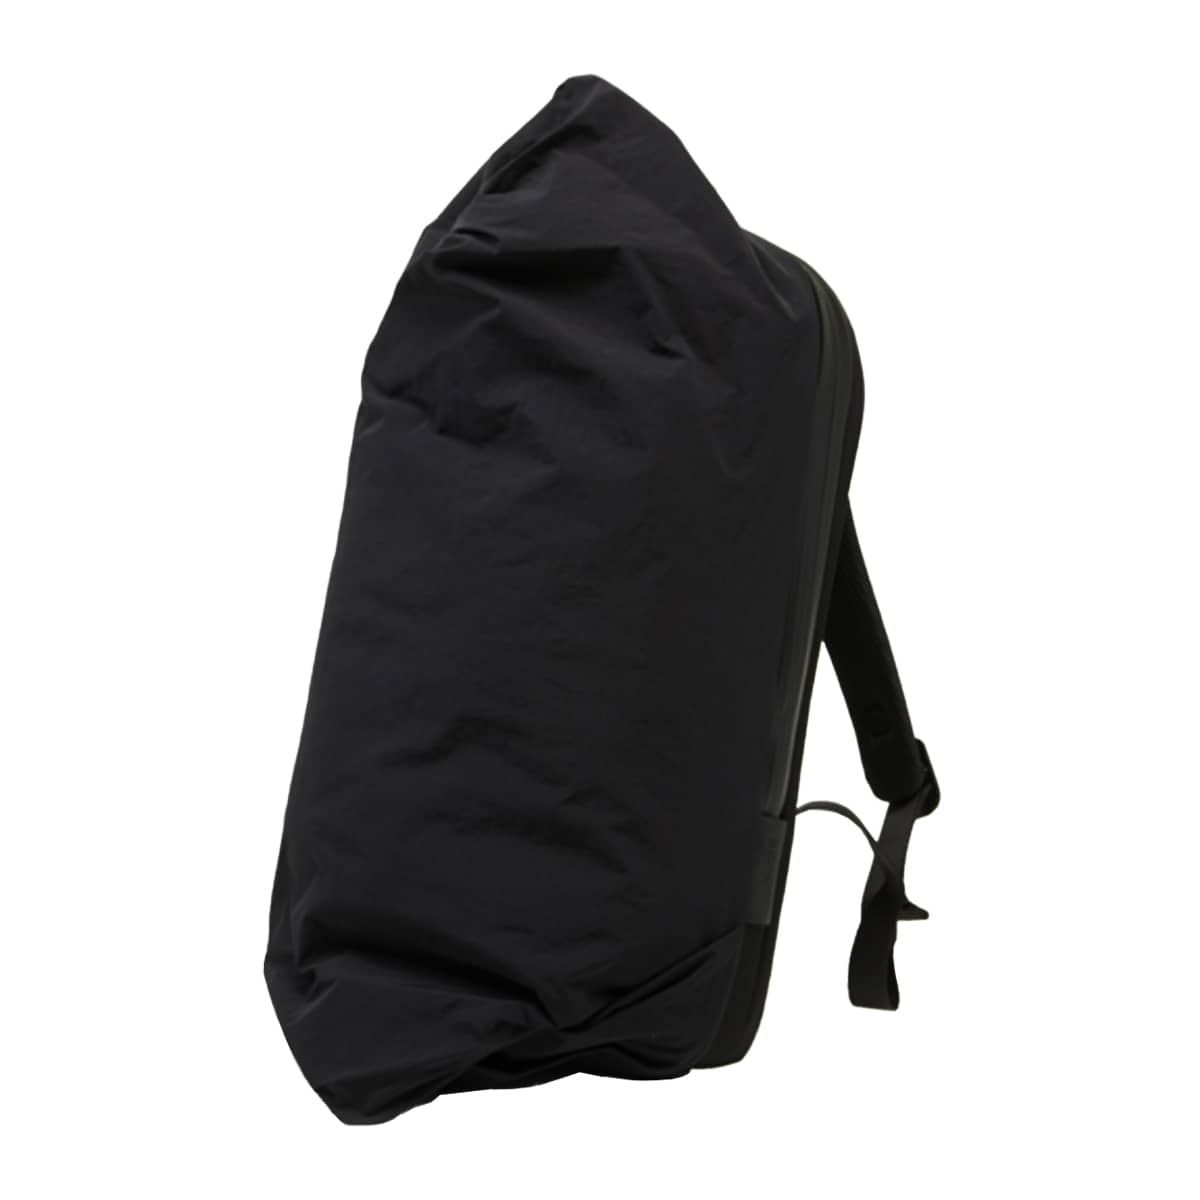 Sormonne Obsidian Backpack